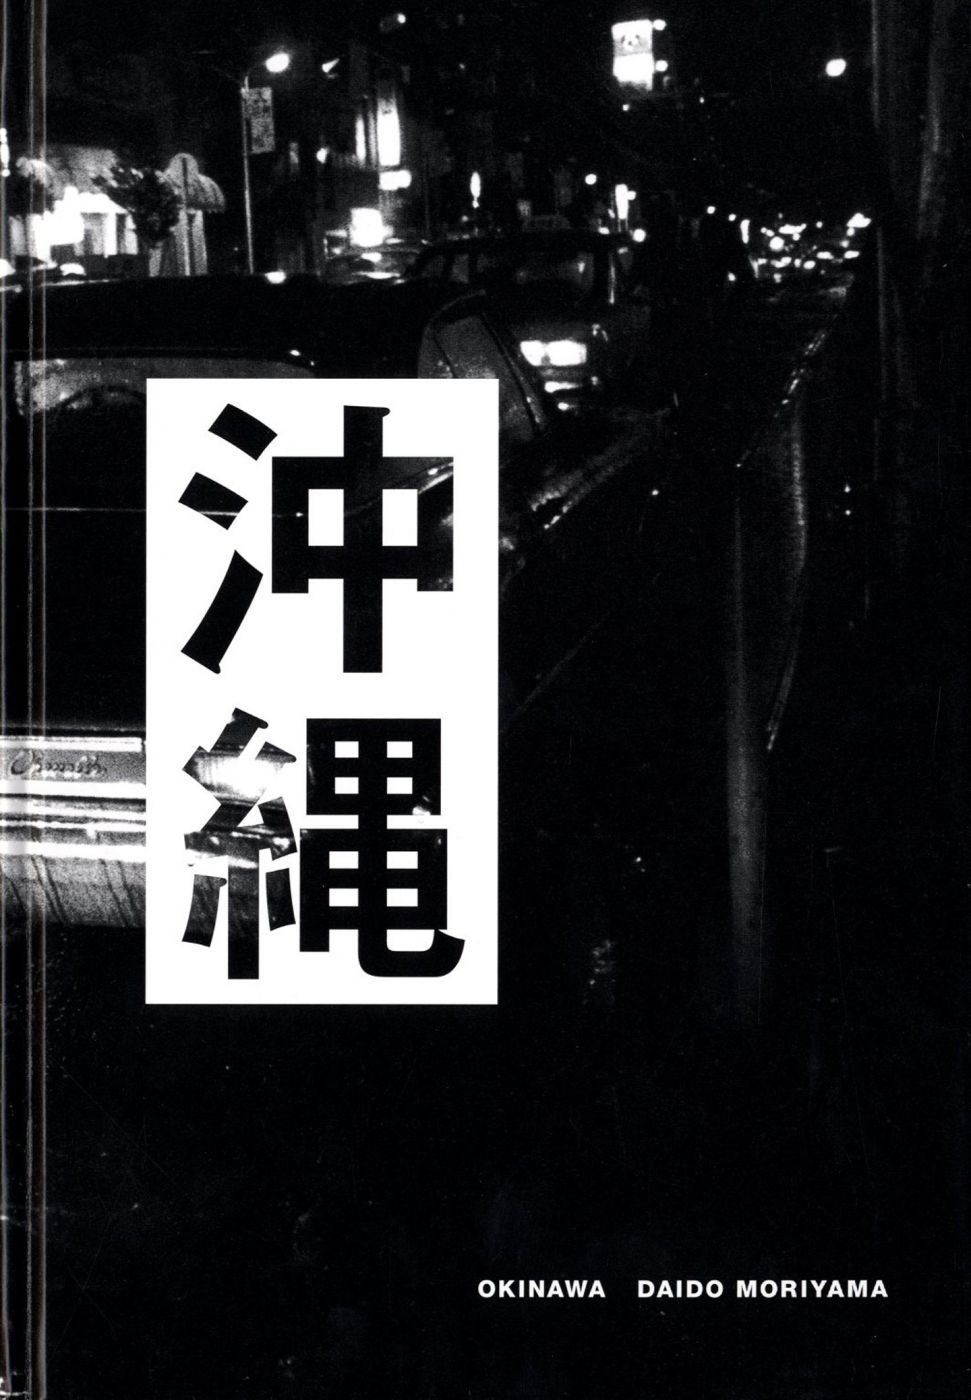 Daido Moriyama: Okinawa (Super Labo), Limited Edition (with Gelatin Silver Print, "Chevelle" Variant) [SIGNED]